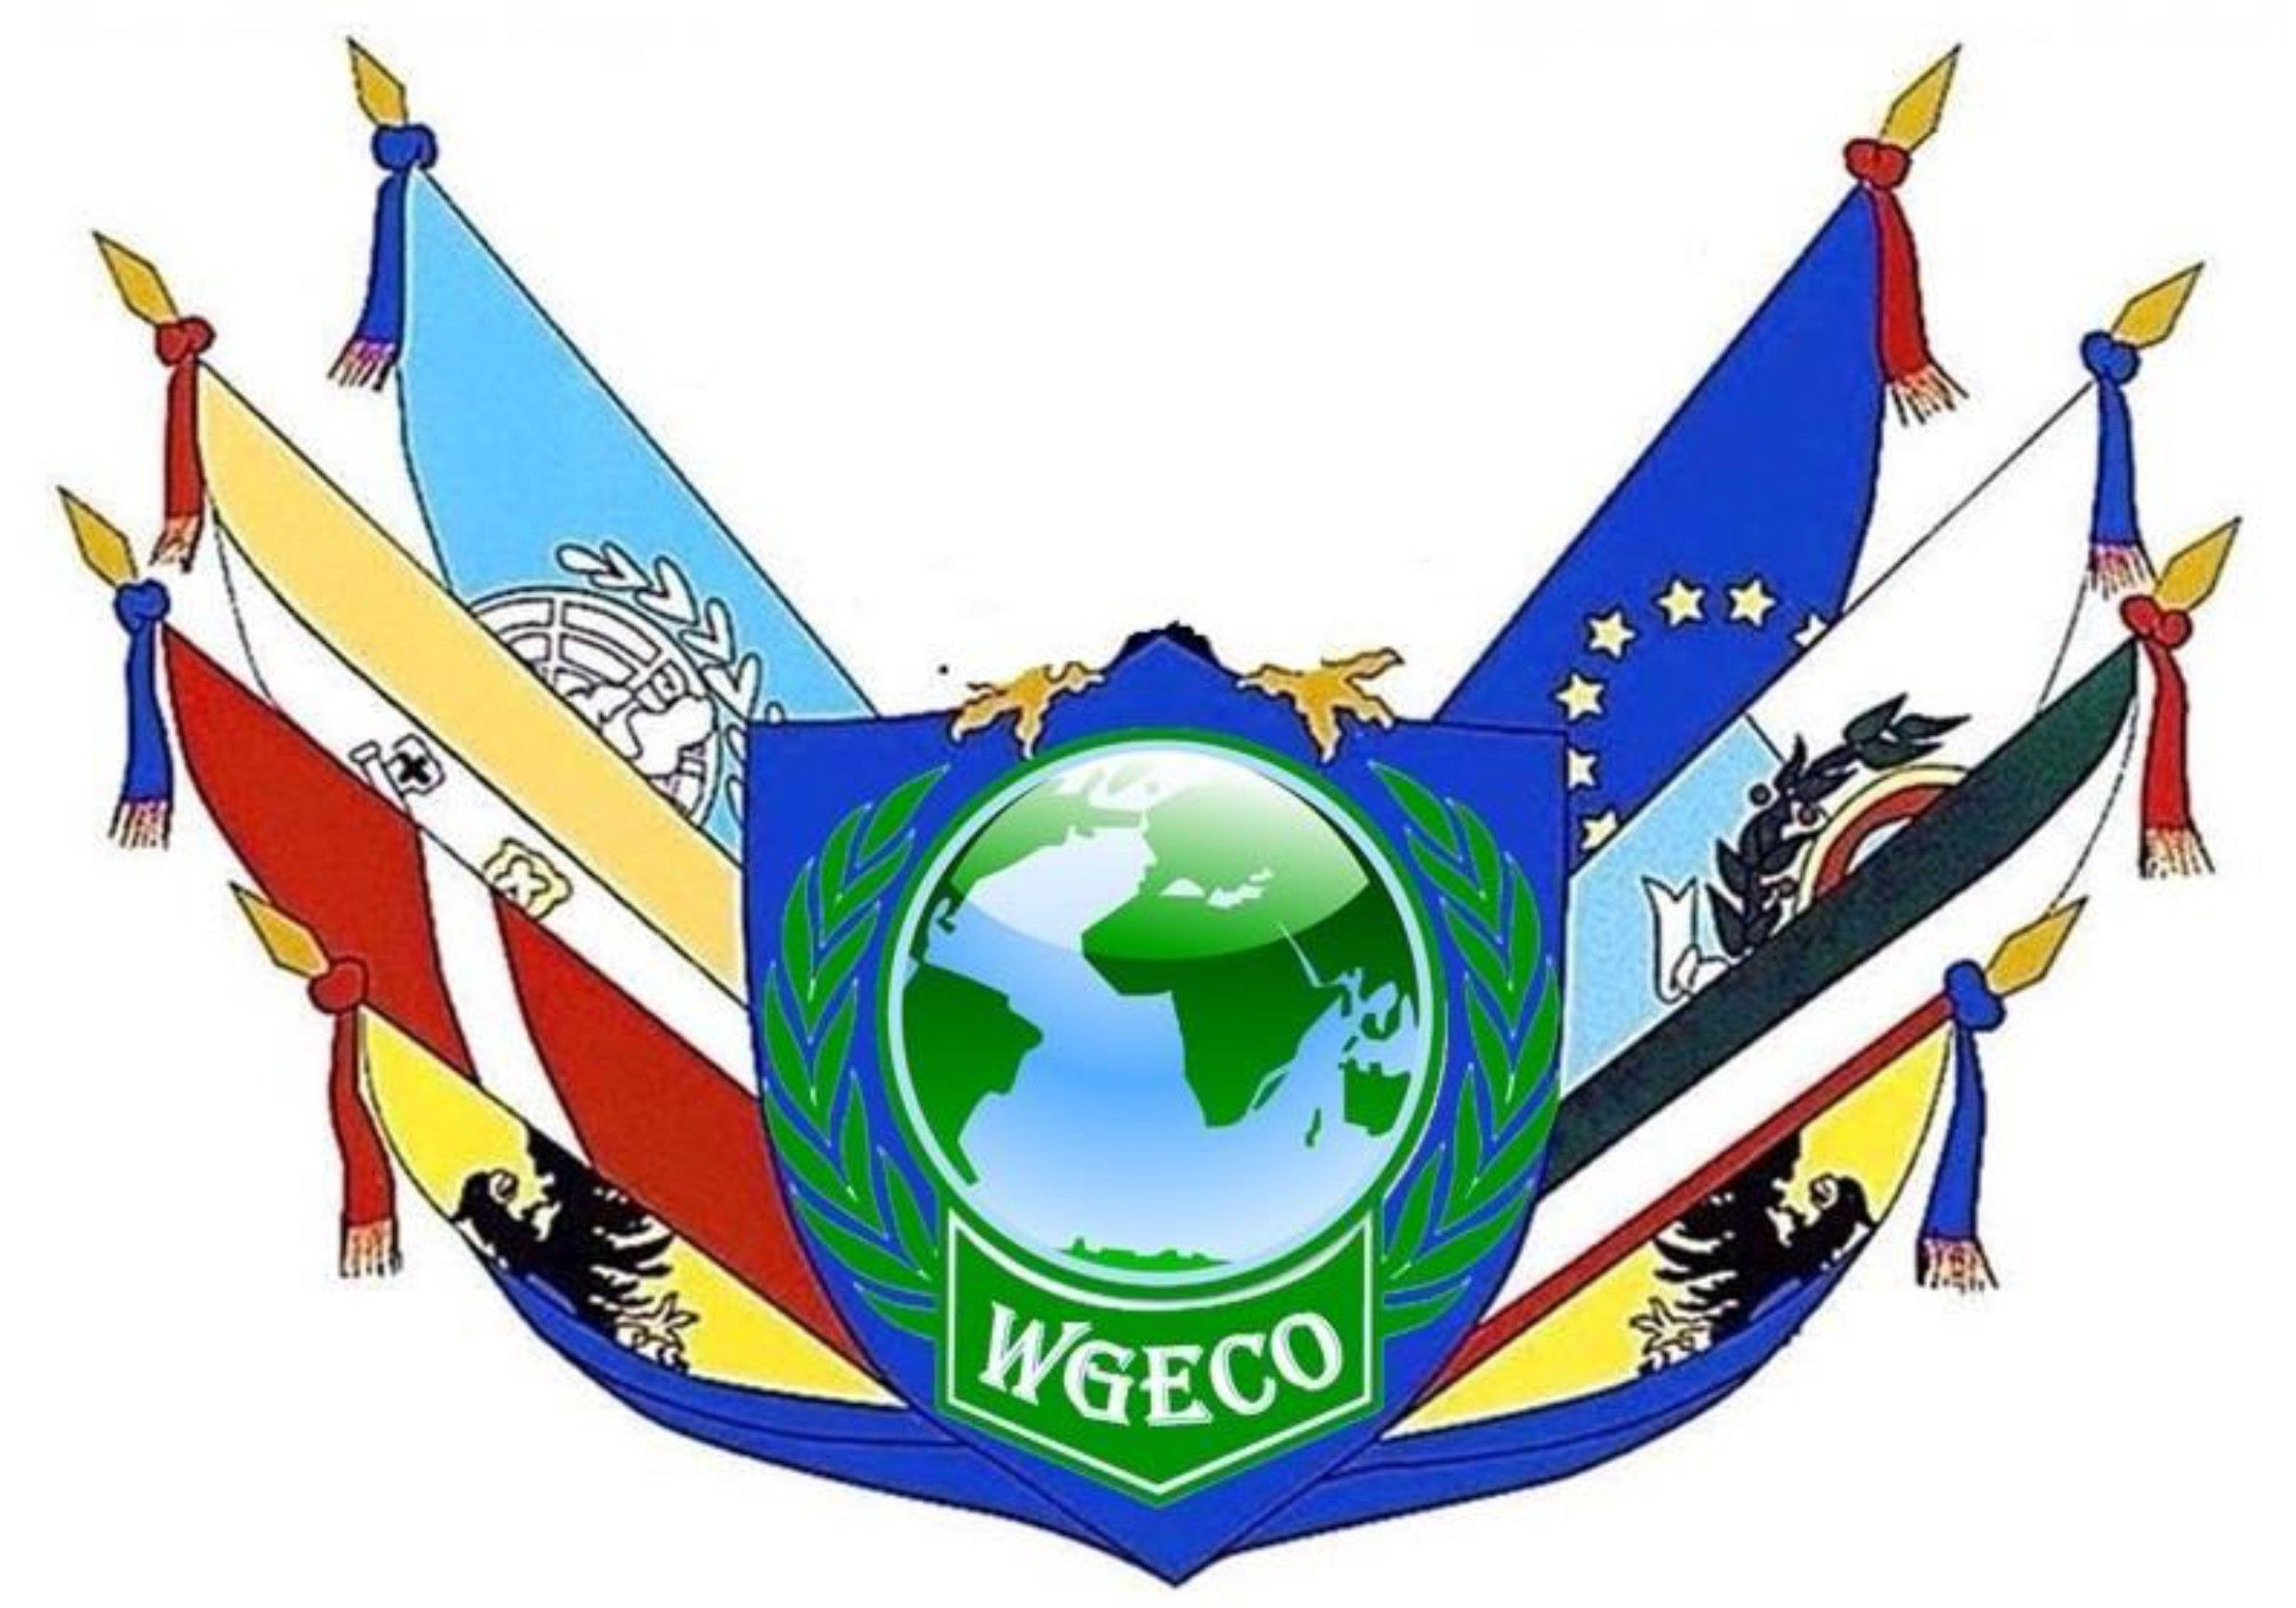 World Green Economy Council - WGECO